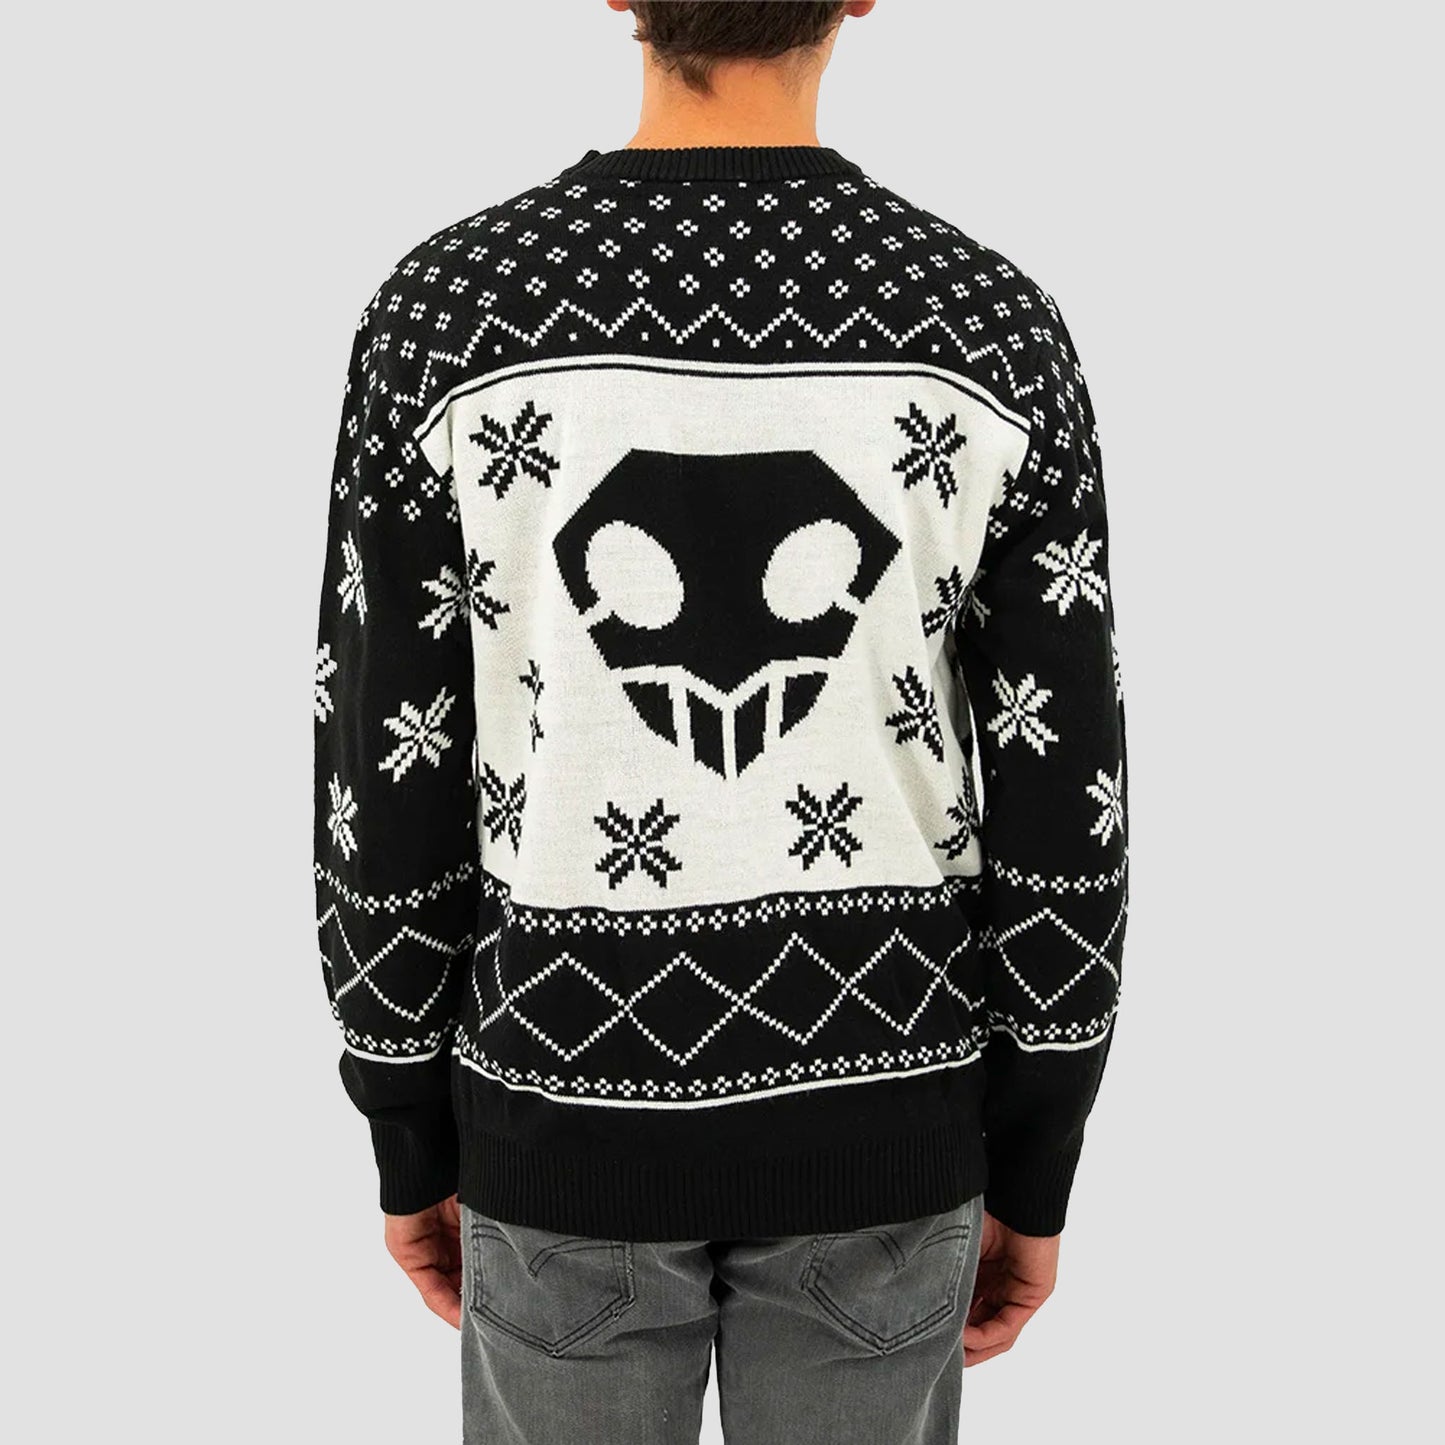 Soul Reaper Ichigo (Bleach) Holiday Fleece Sweater